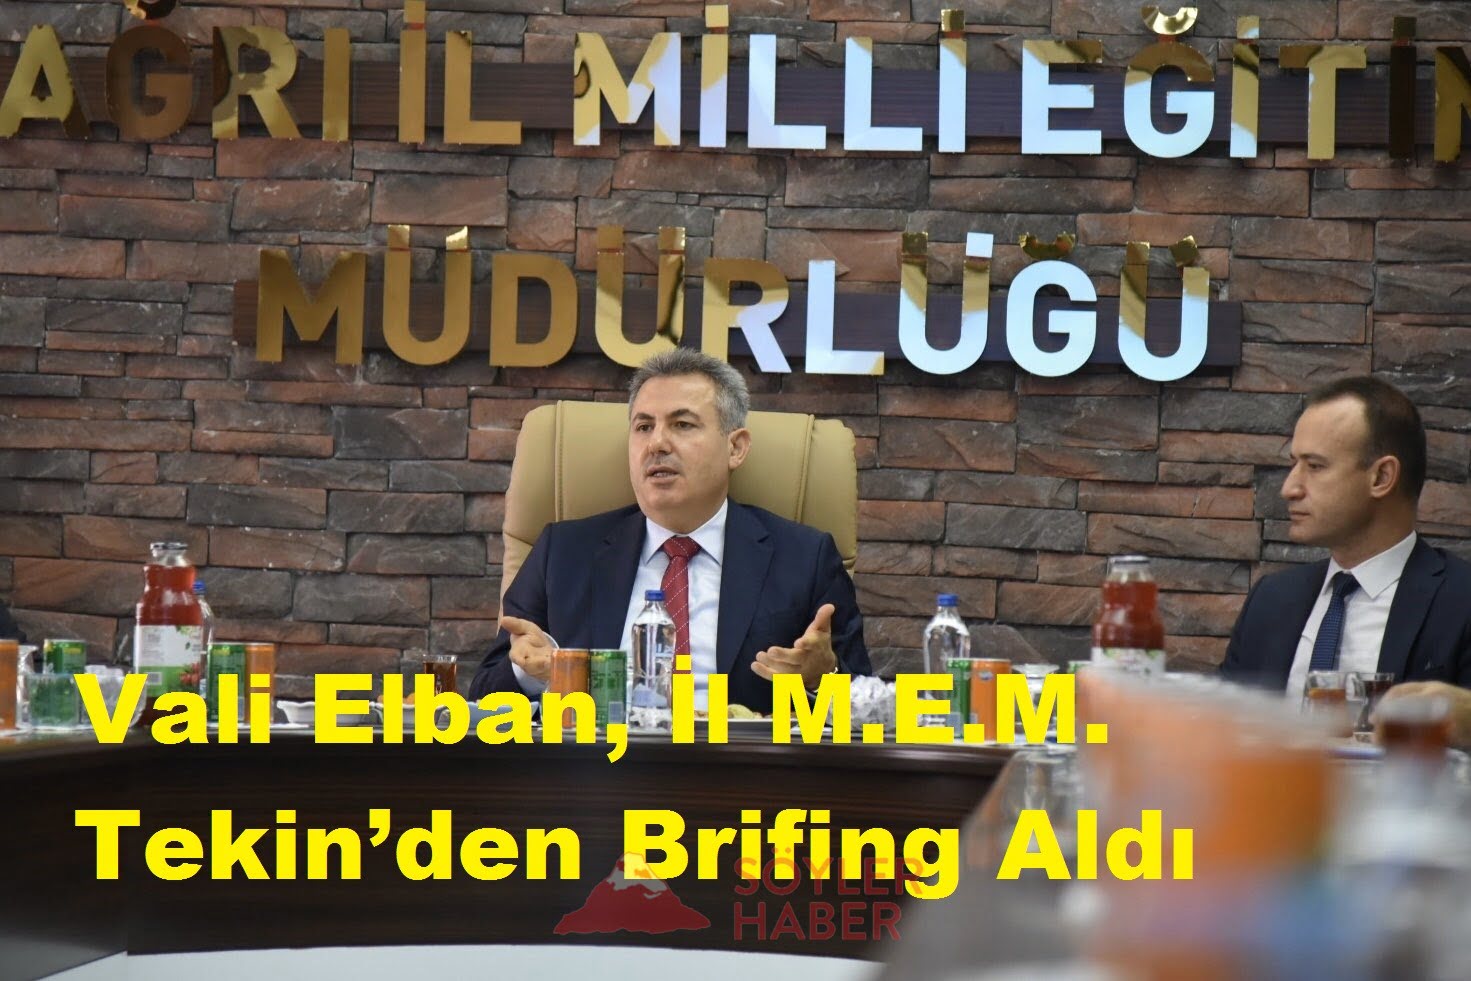 Vali Elban, İl M.E.M. Tekin'den Brifing Aldı.